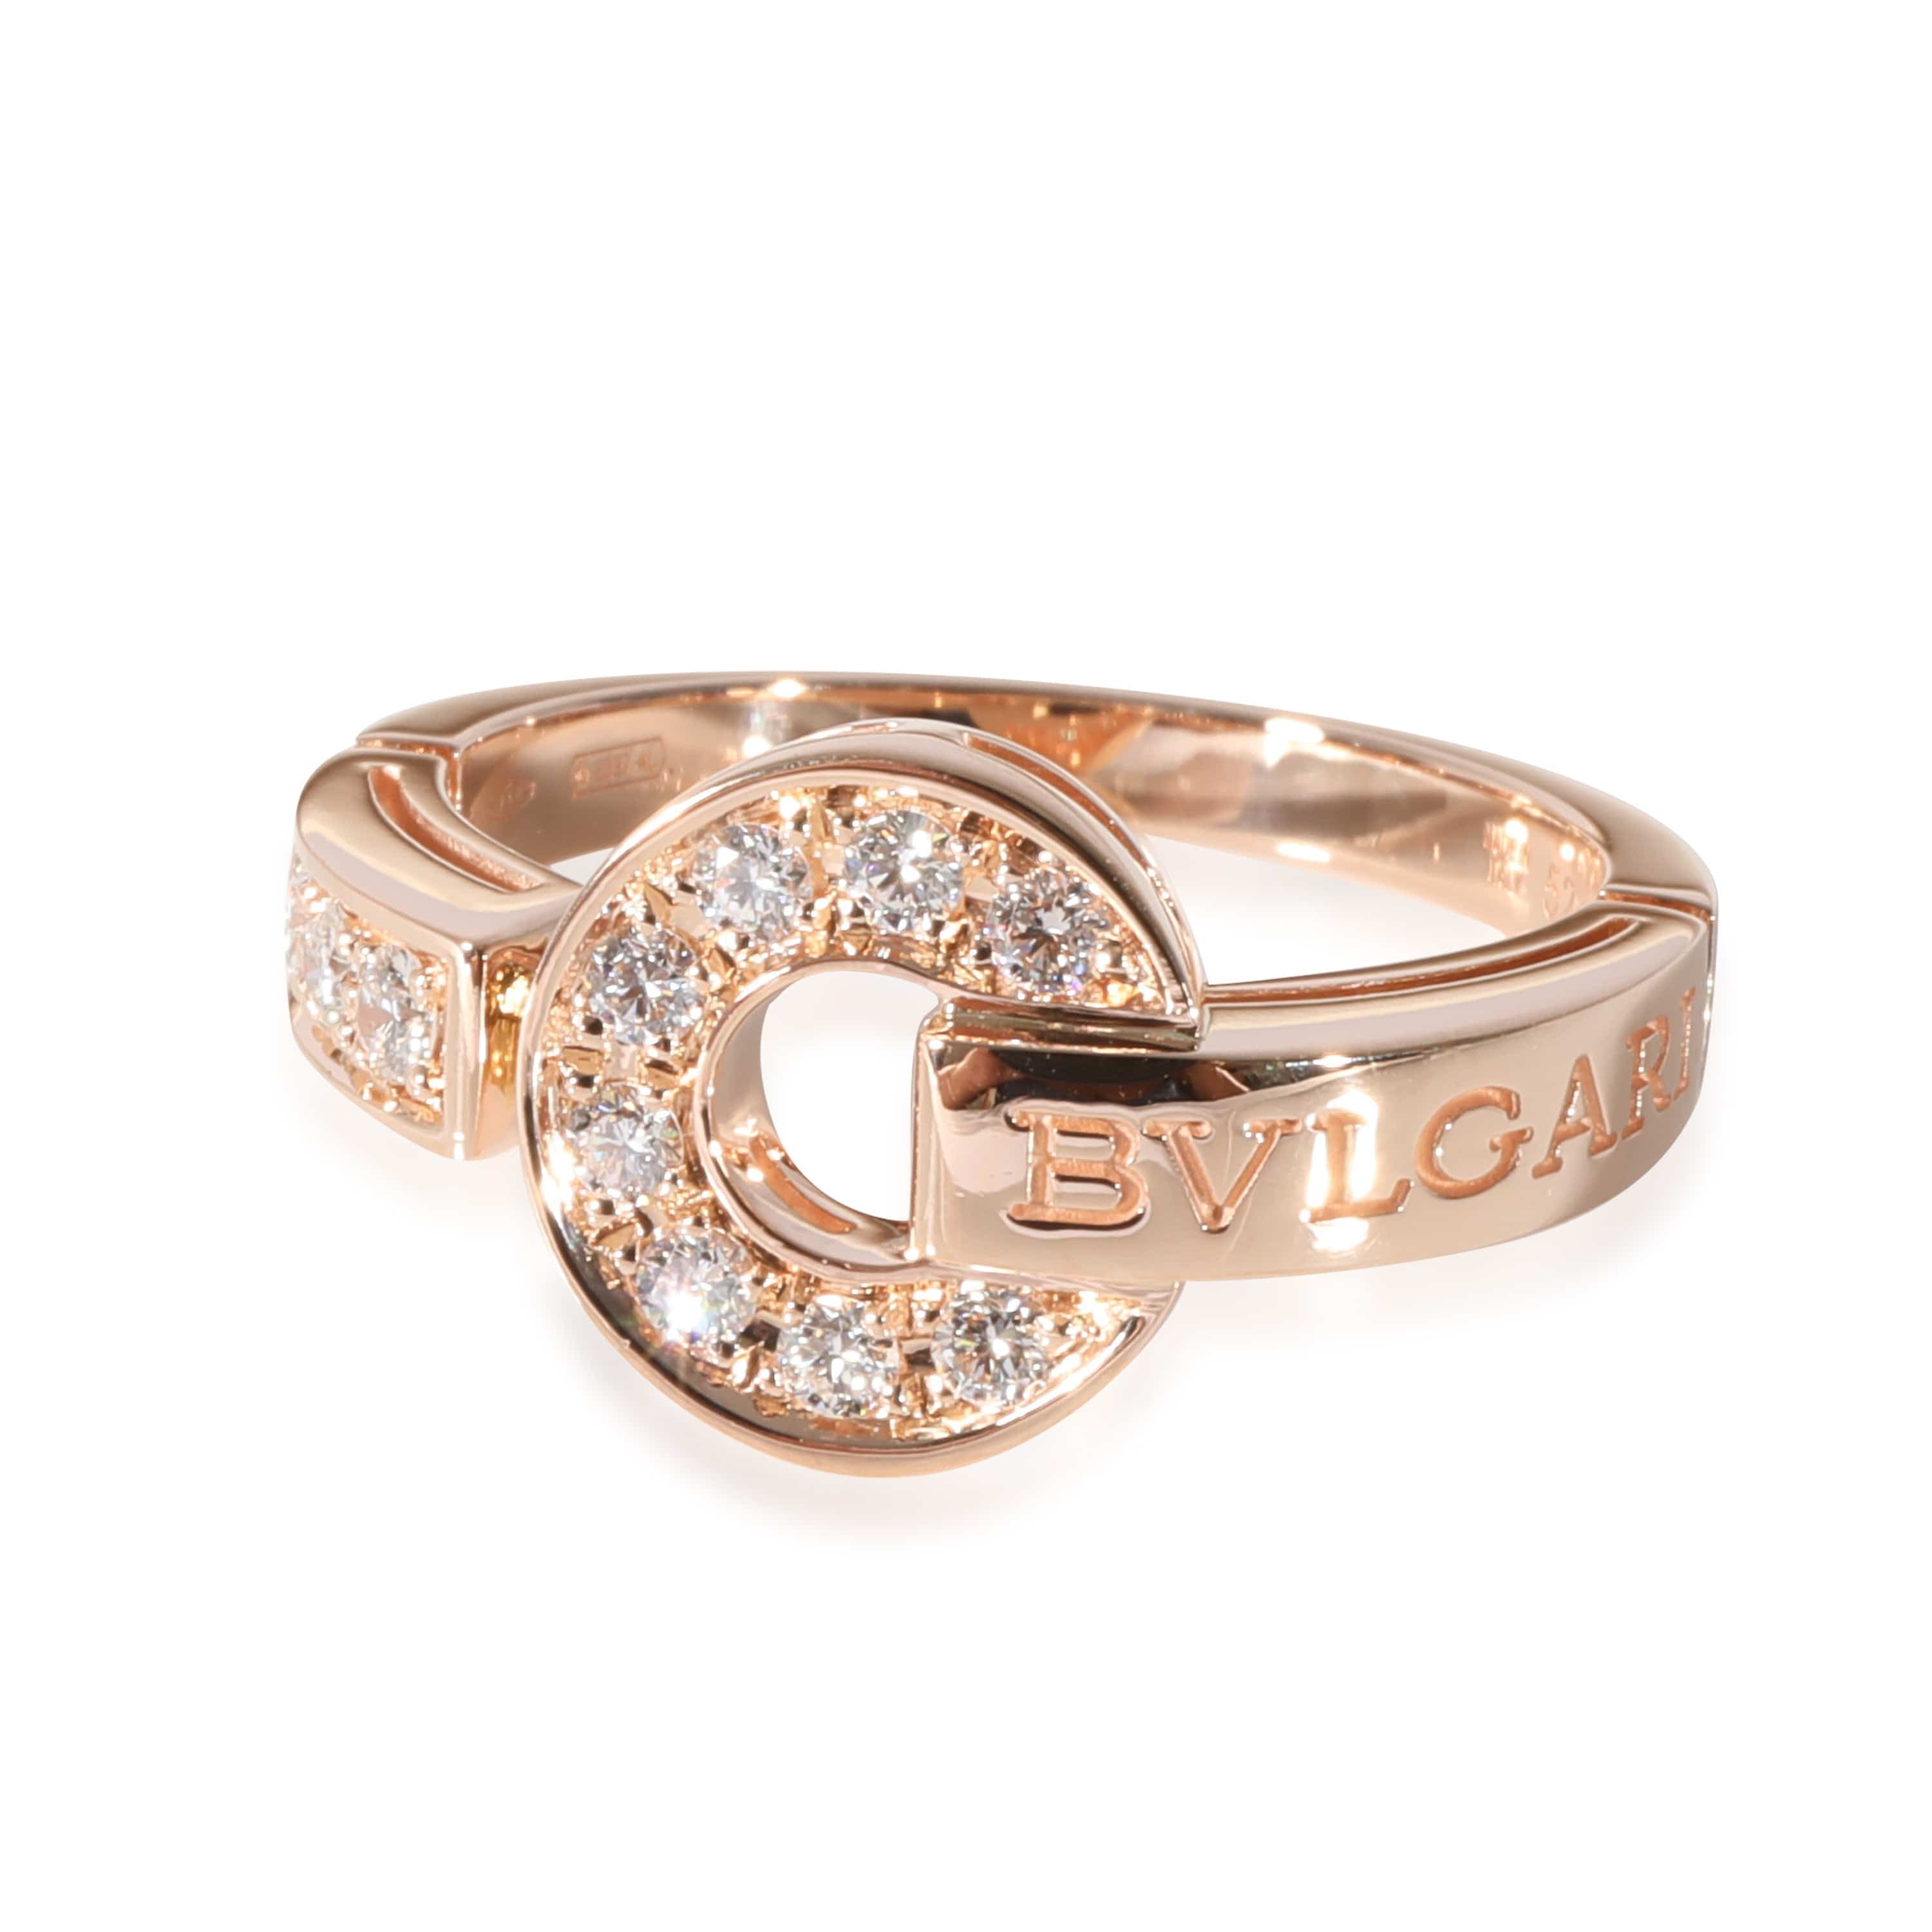 BVLGARI BVLGARI Bvlgari Bvlgari Diamond  Ring in 18k Rose Gold 0.28 CTW